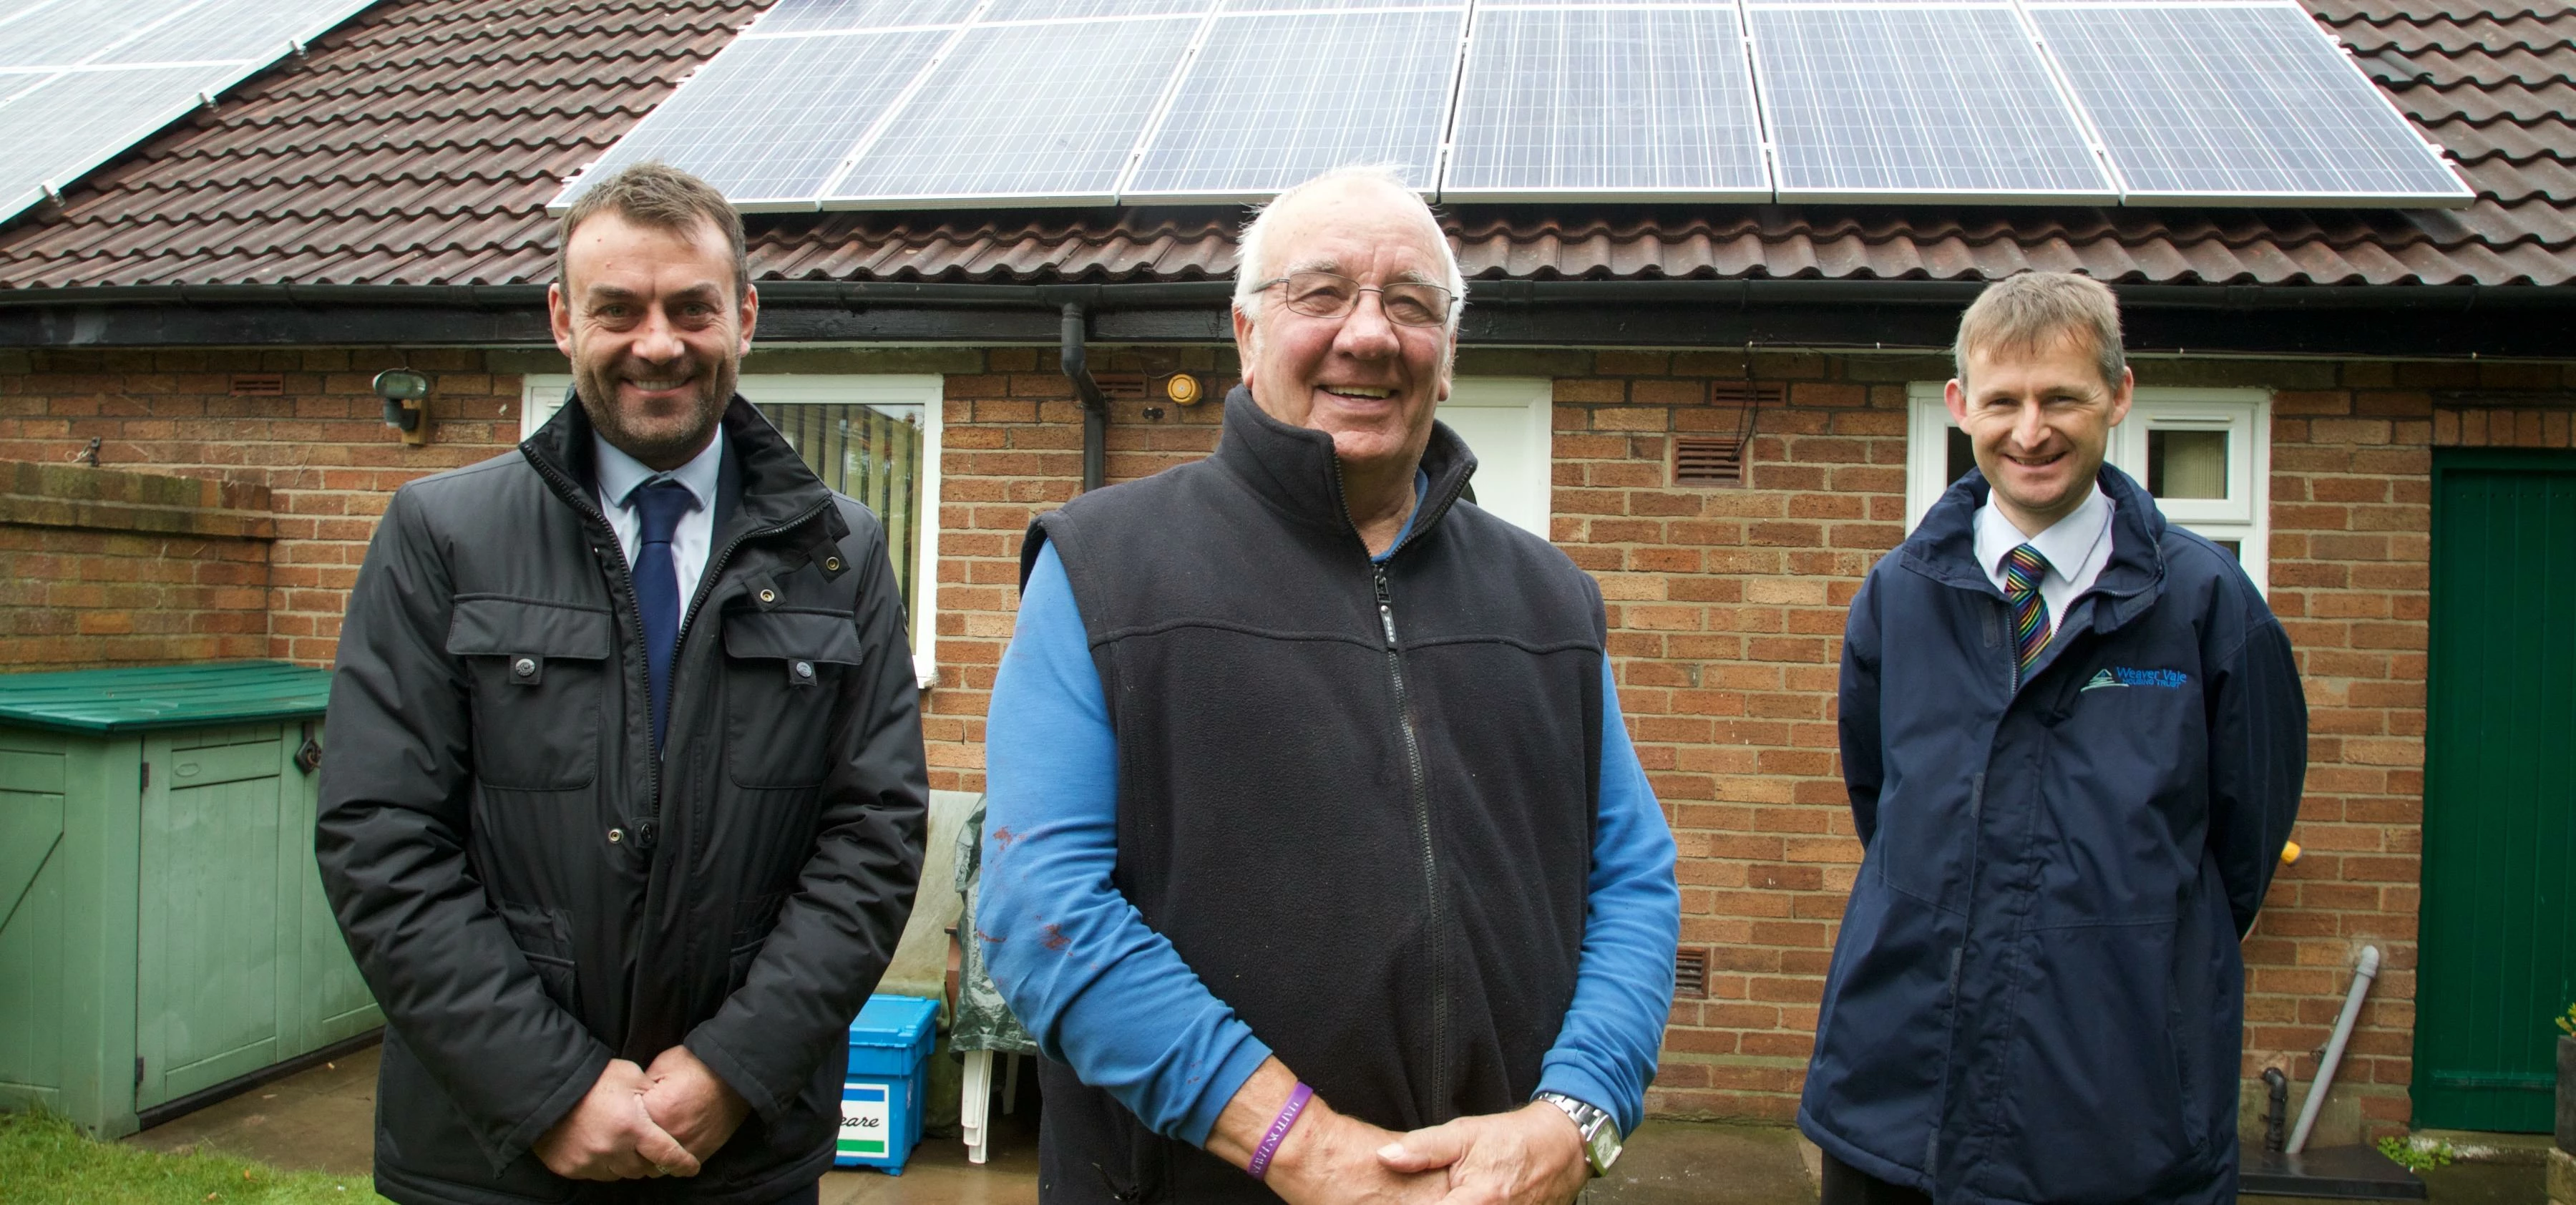 Weaver Vale Housing Trust customer Mr Mercer (centre) will save money on his energy bills, following